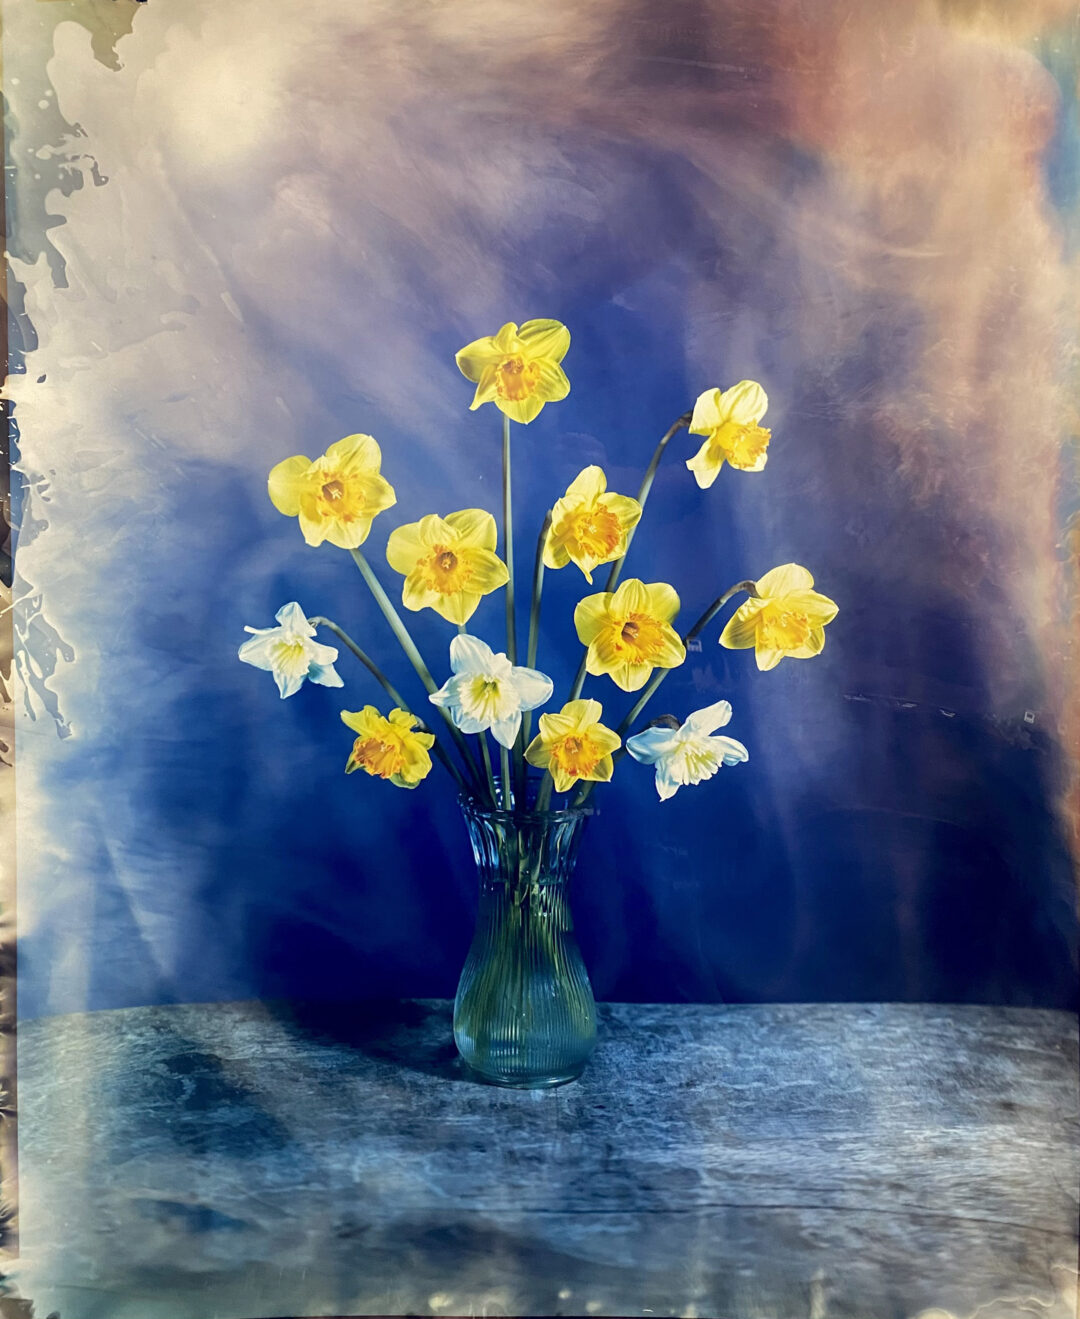 Brendan Barry Daffodils Unique Chromogenic photograph made using a Camera Obscura